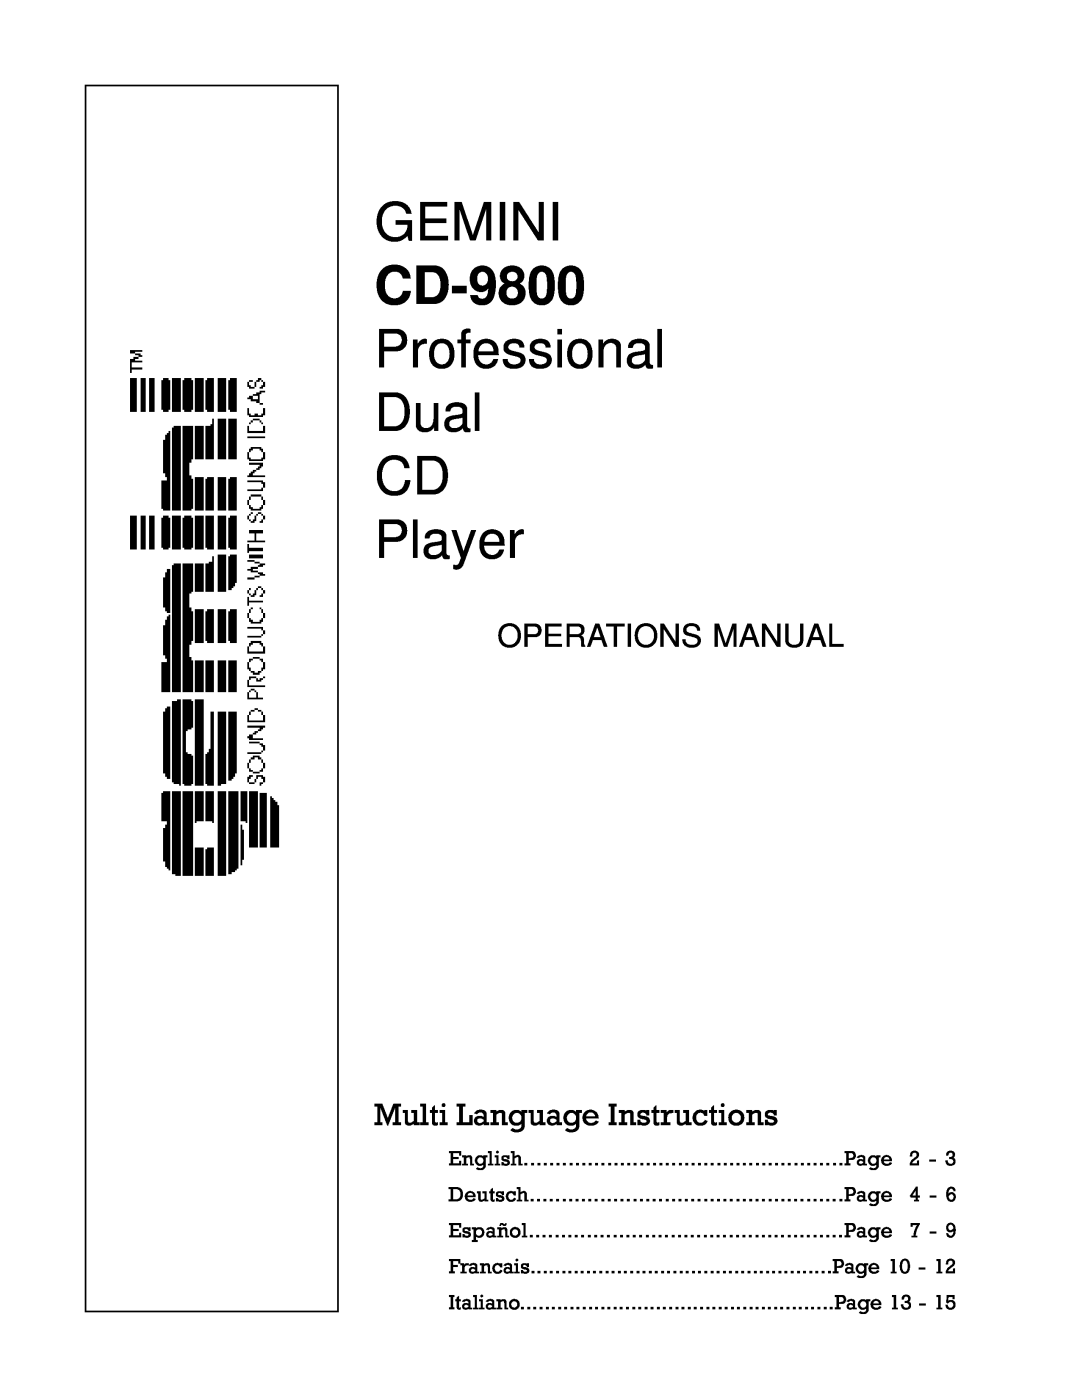 Gemini CD-9800 manual Gemini, Professional Dual CD Player, OPERATIONS MANUAL Multi Language Instructions 